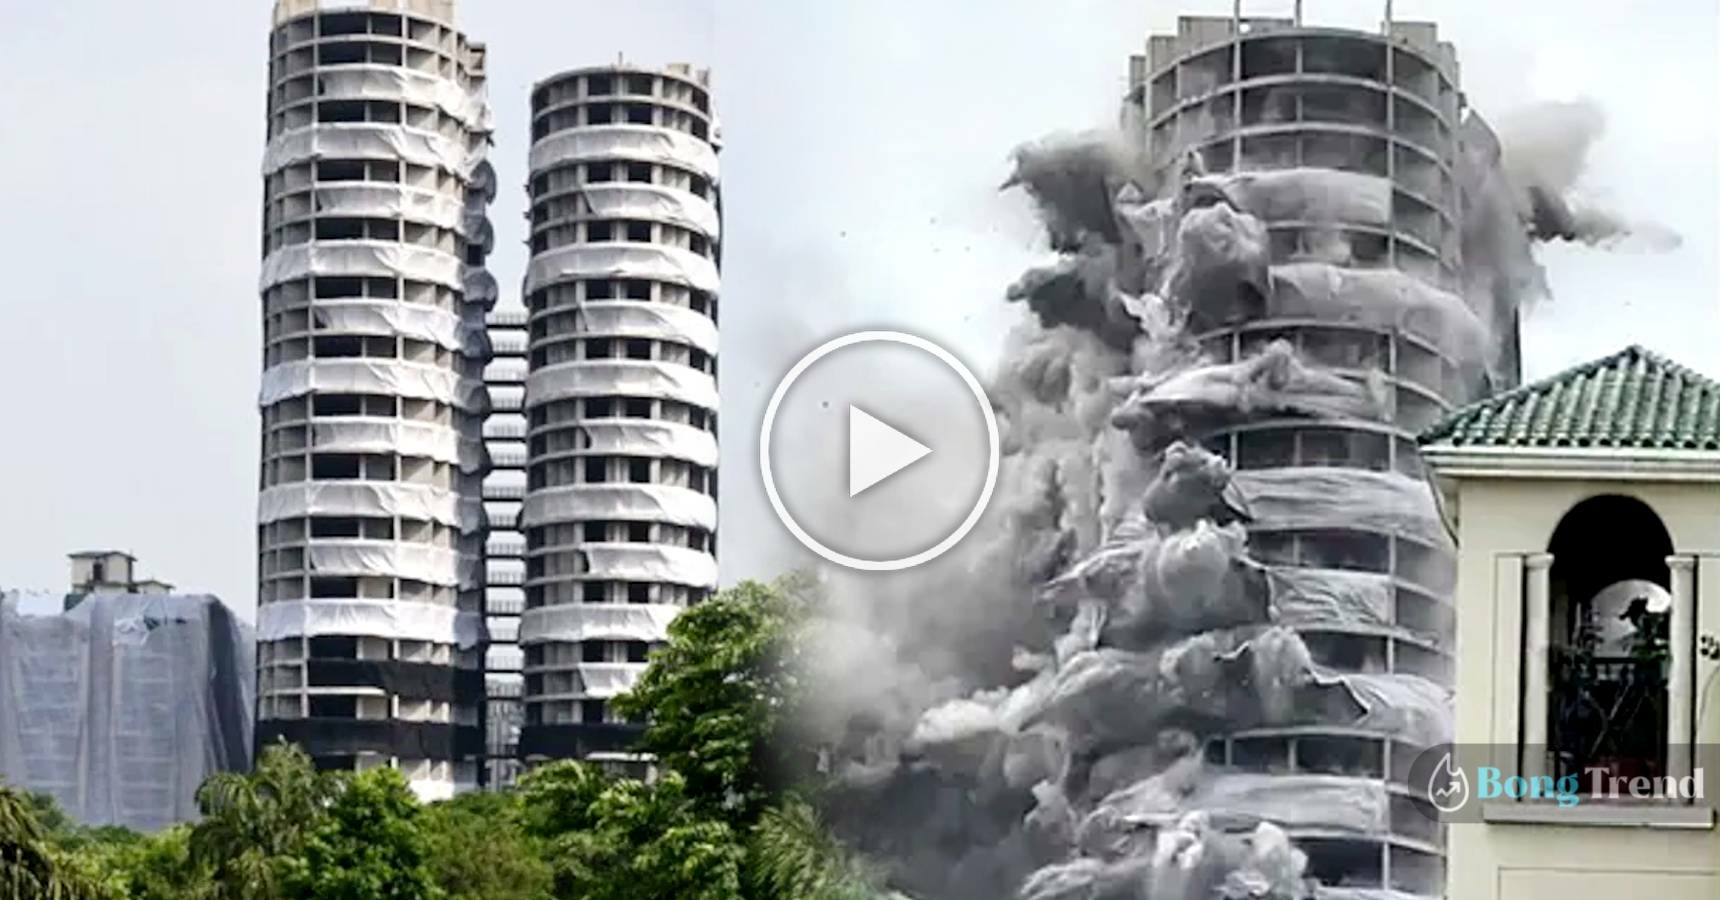 Supertech twin tower,Noida twin tower,Noida twin tower demolition,Supertech twin tower demolition,সুপারটেক টুইন টাওয়ার,নয়ডা টুইন টাওয়ার,নয়ডা,Viral Video,Video,Viral,ভাইরাল ভিডিও,ভিডিও